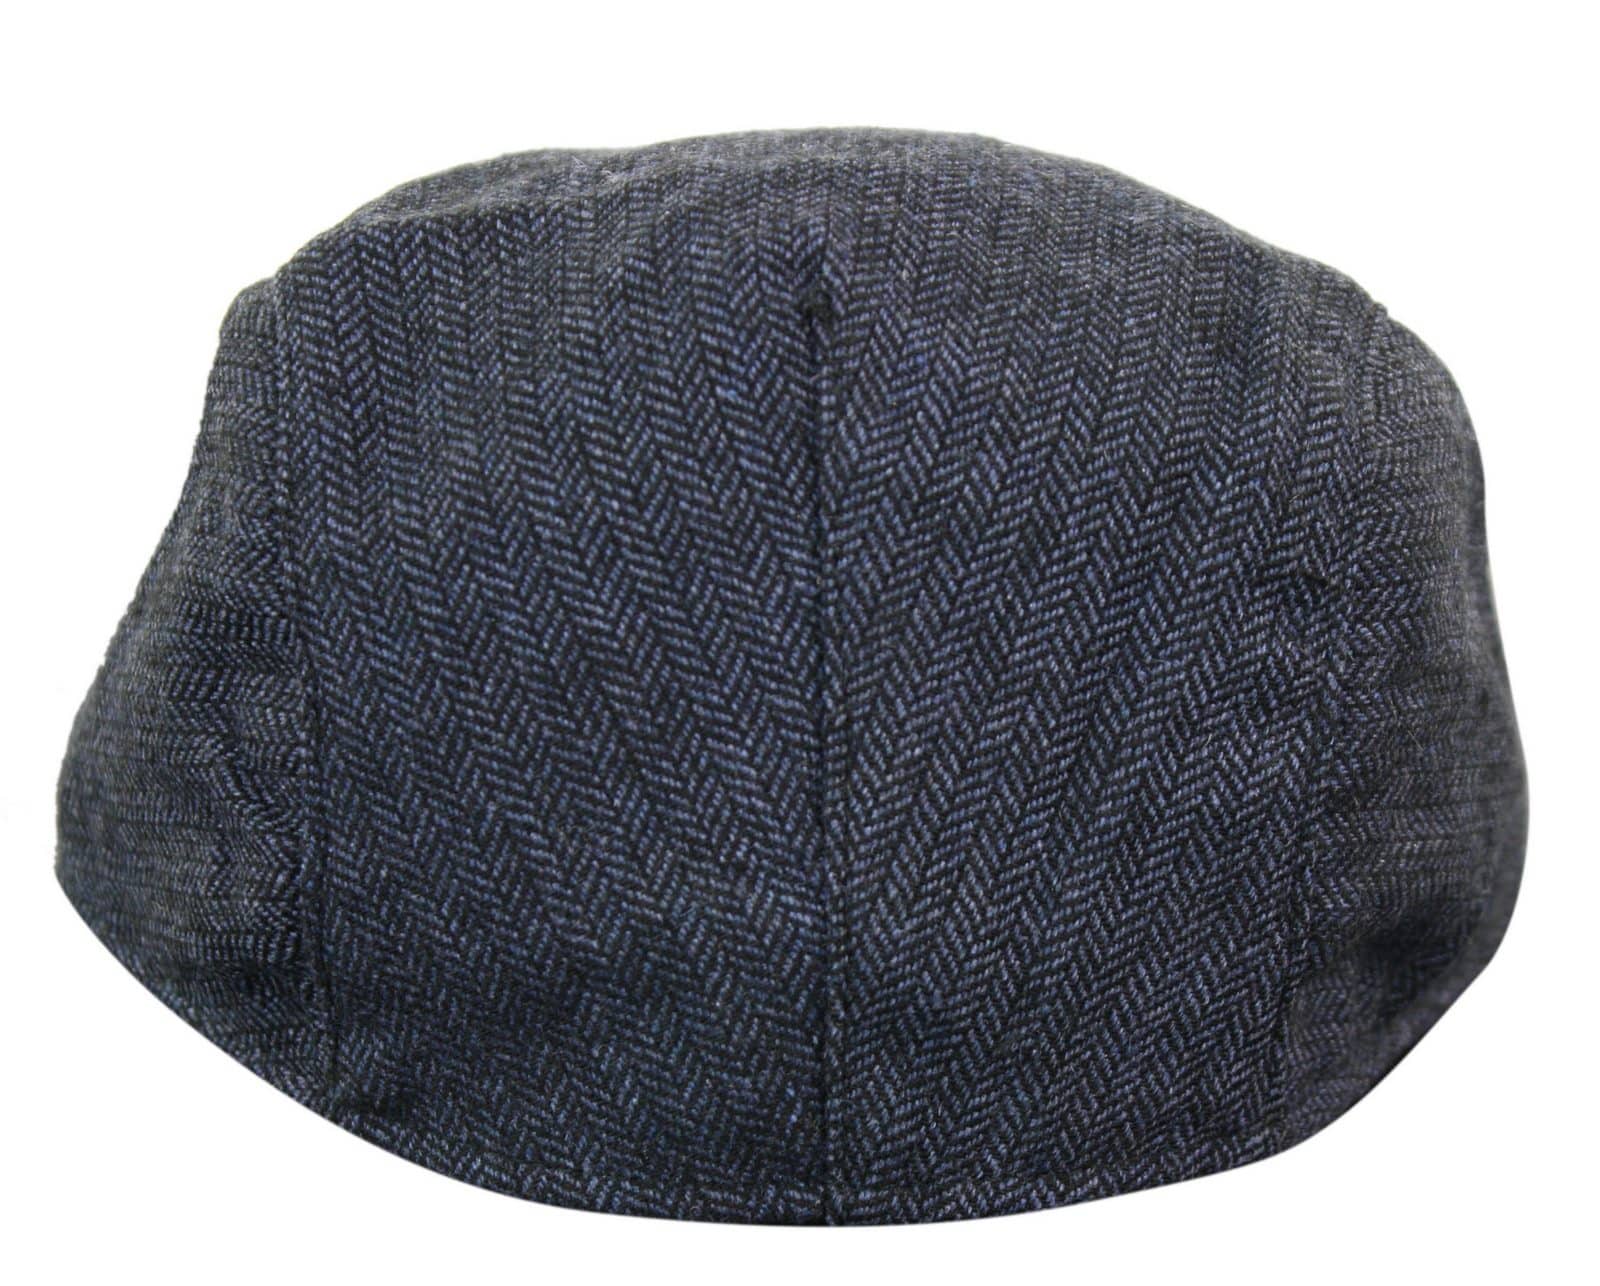 Vintage Men's Hat - Navy